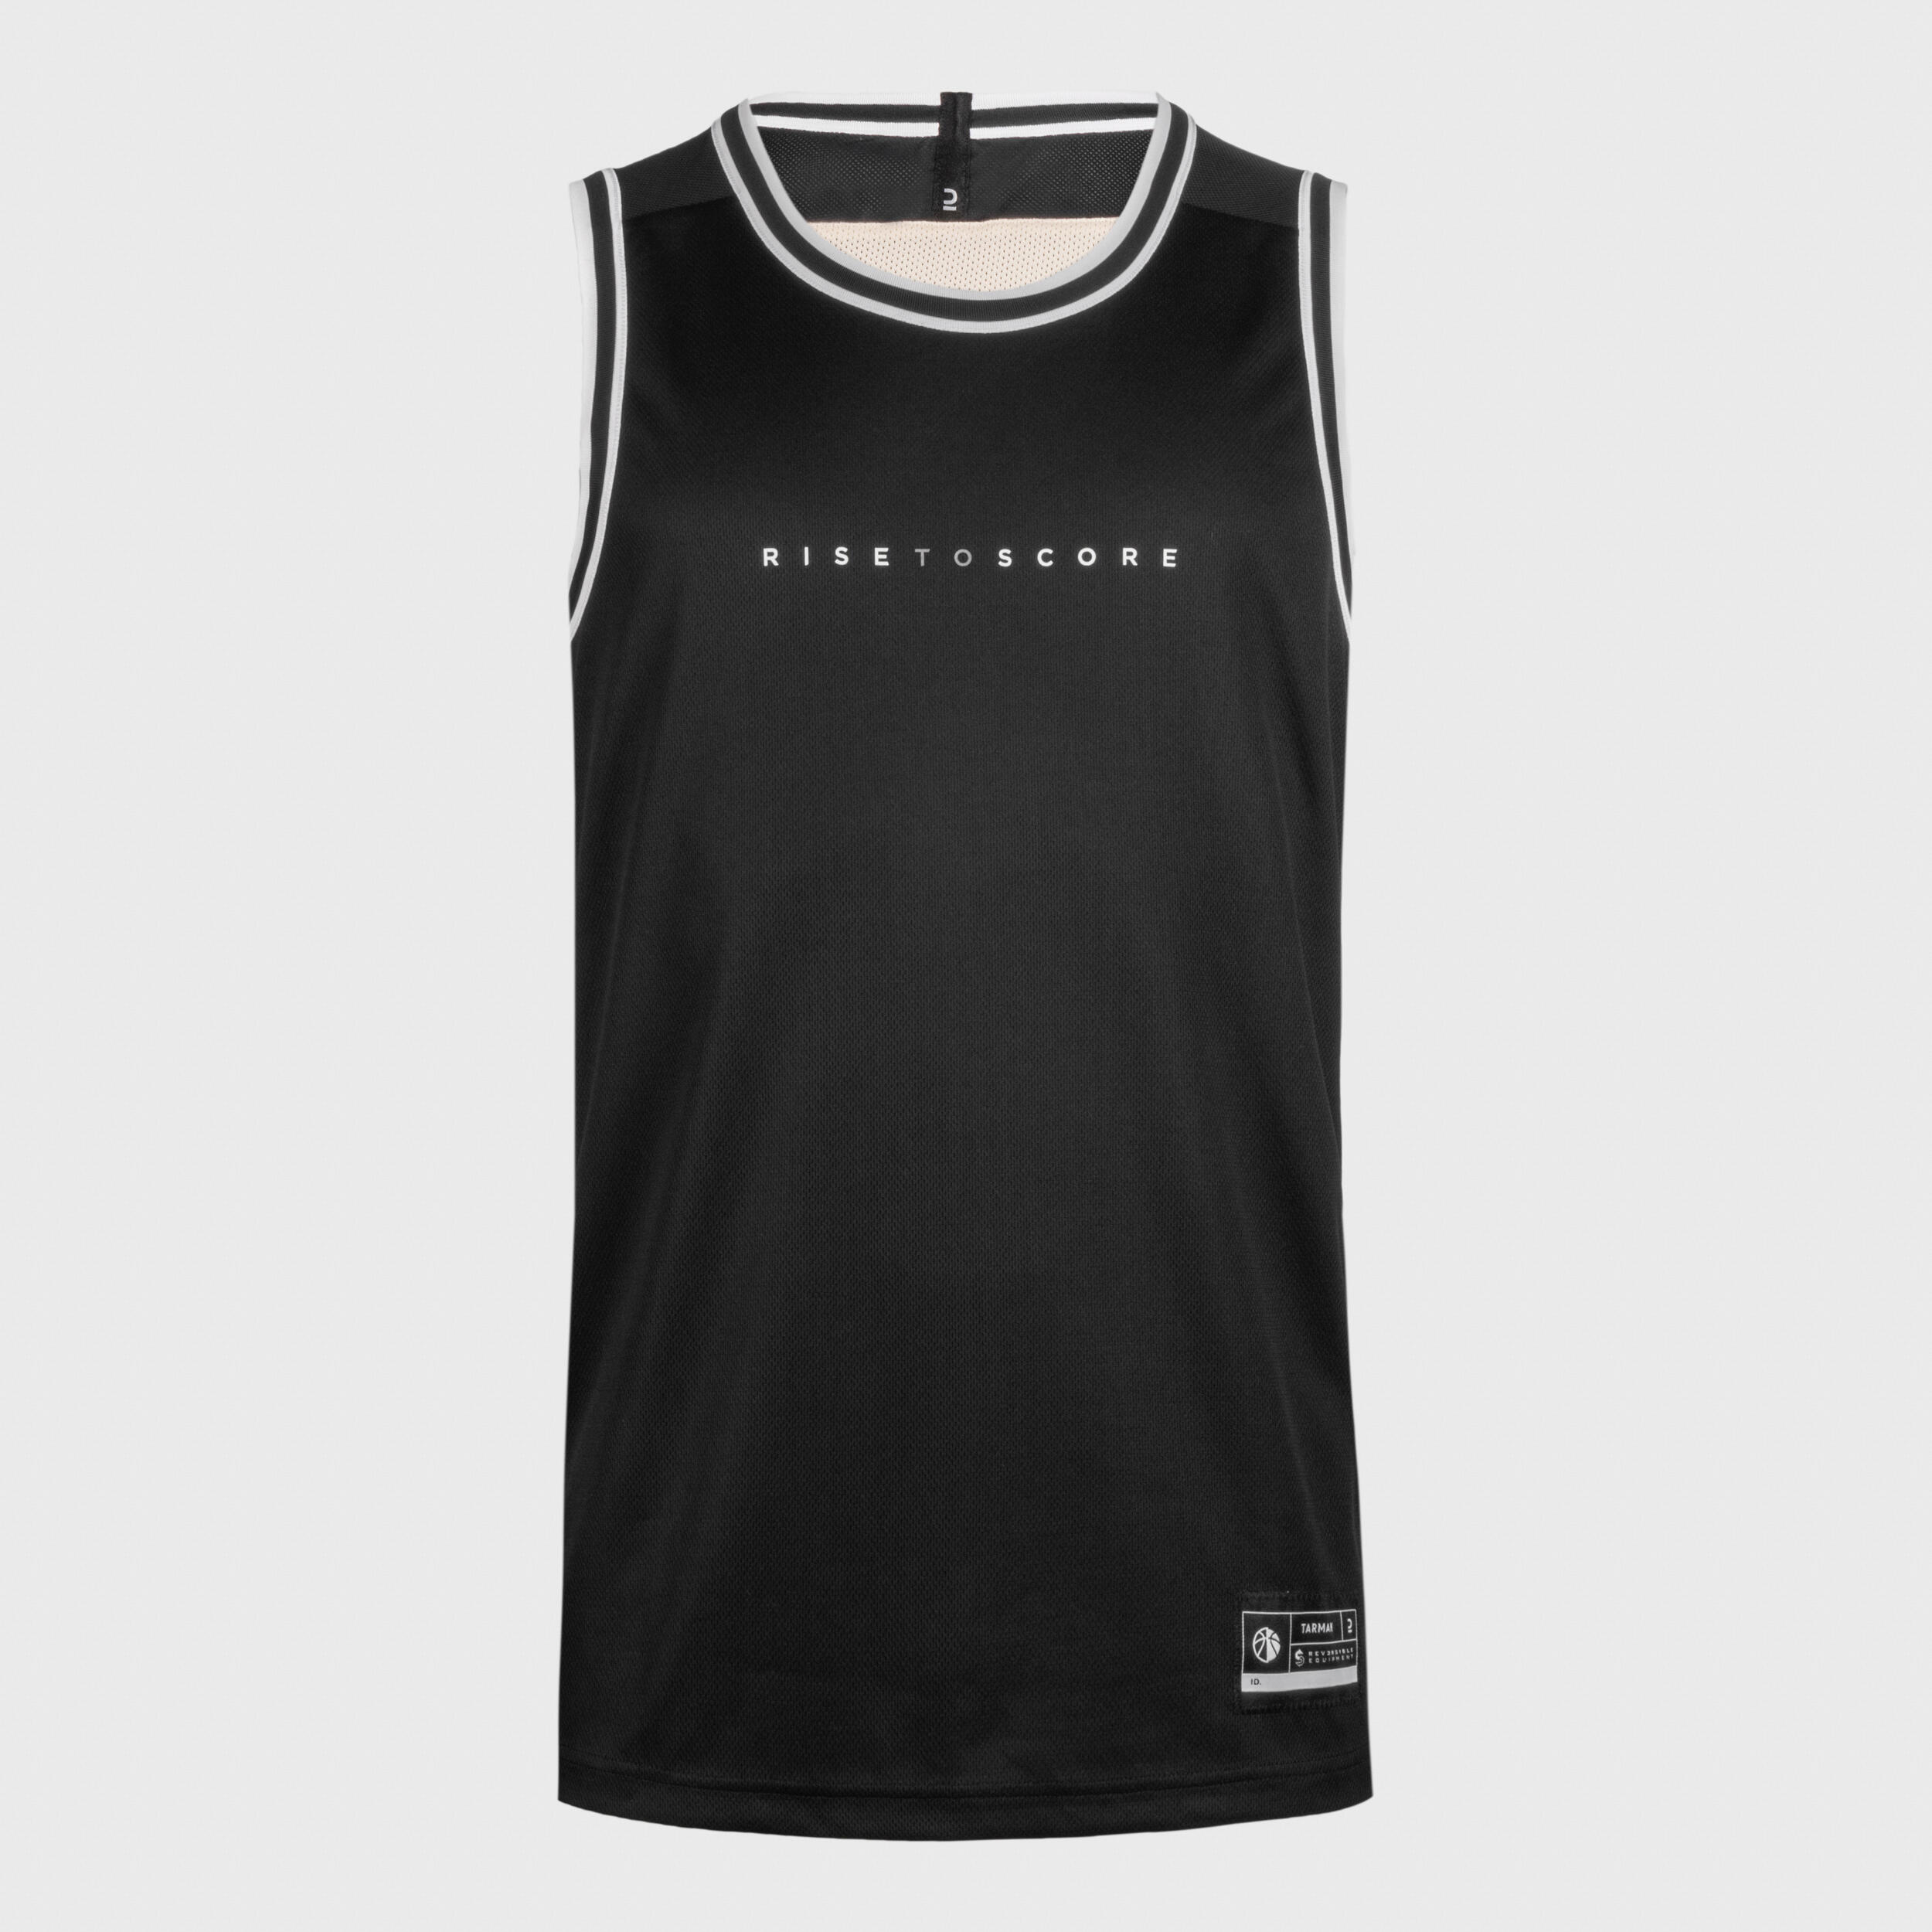 Men's/Women's Sleeveless Basketball Jersey T500 - Black/Beige 5/13